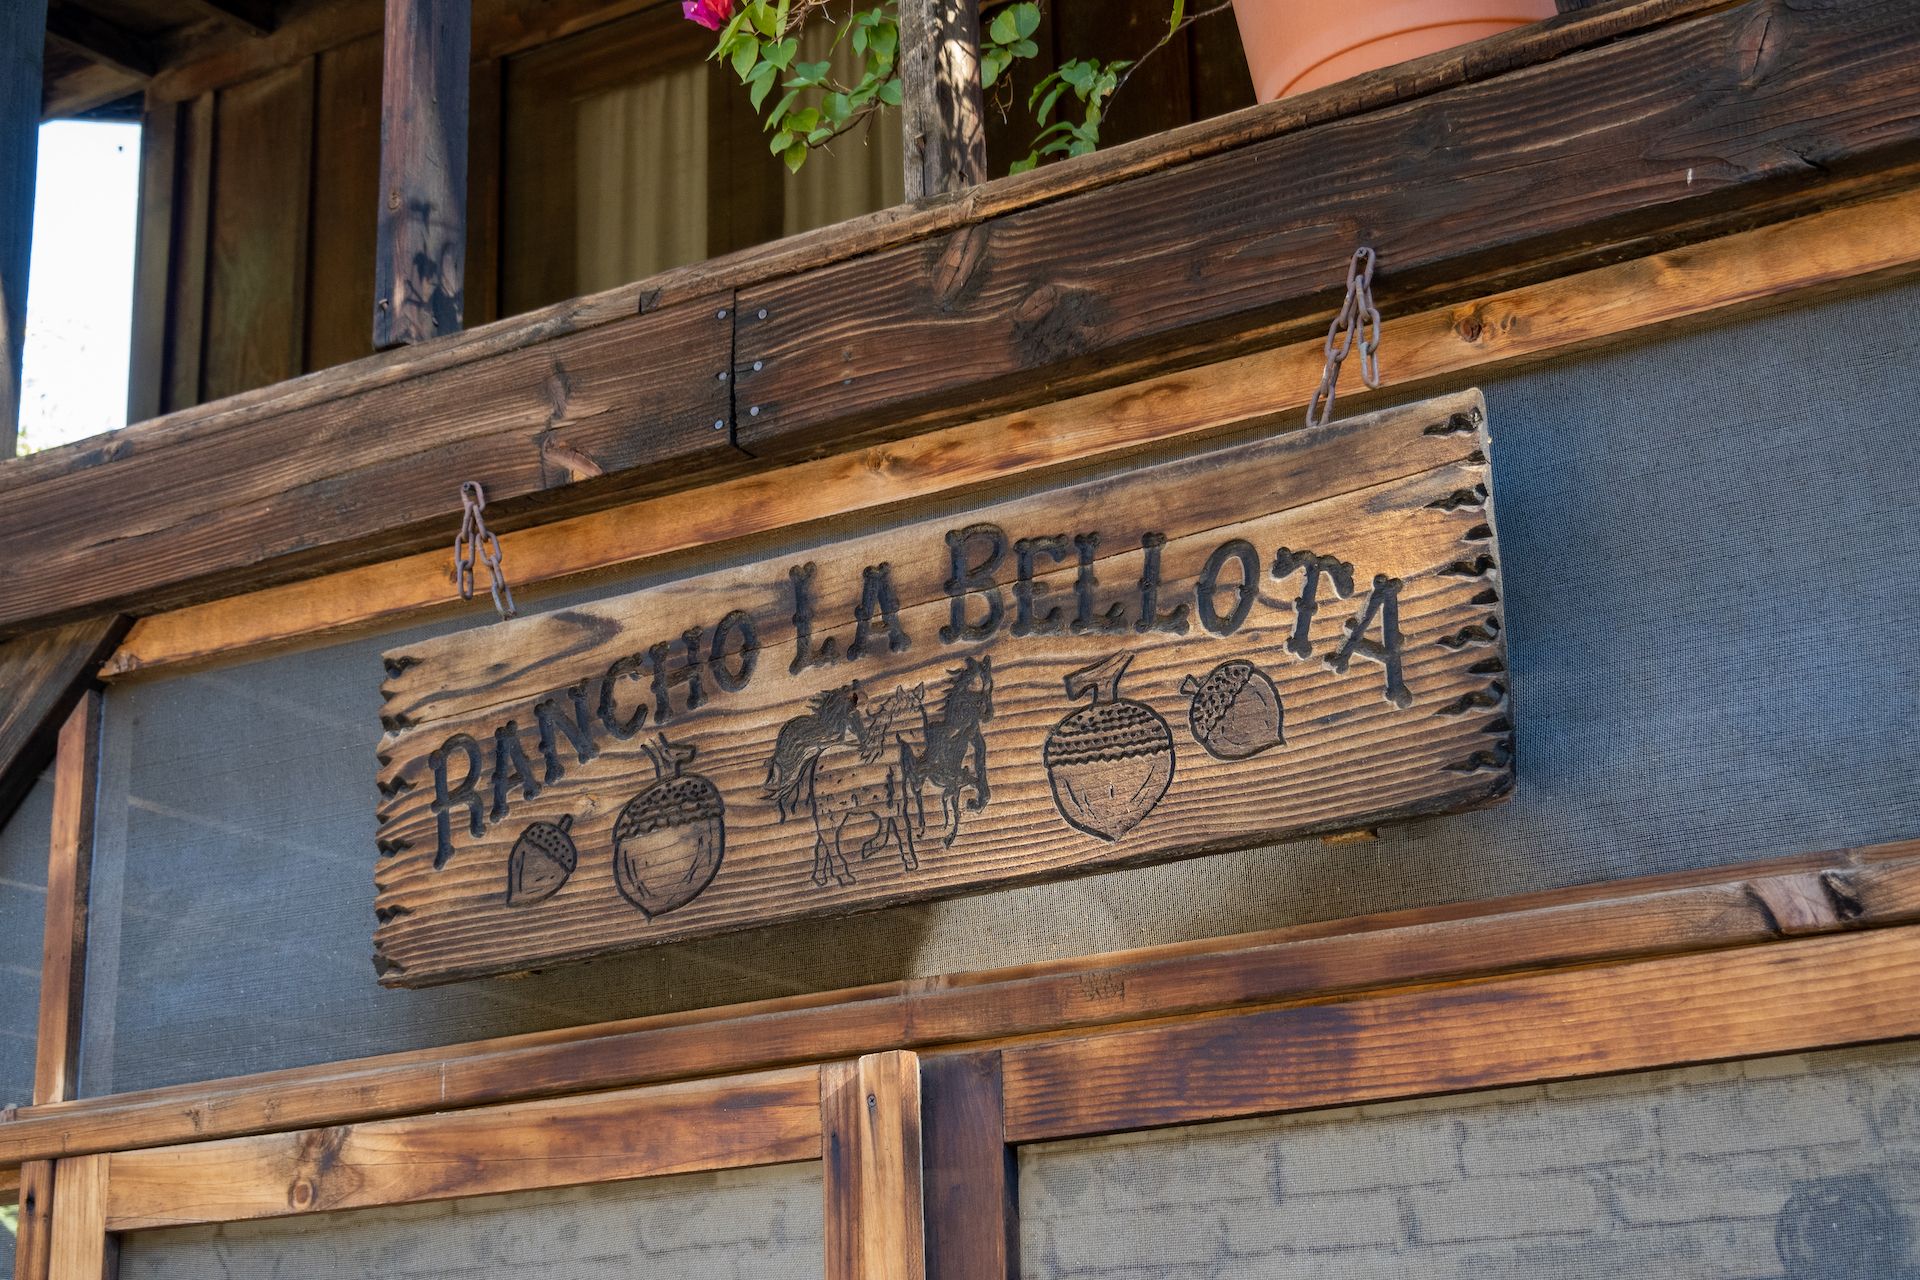 La Bellota means “acorn”